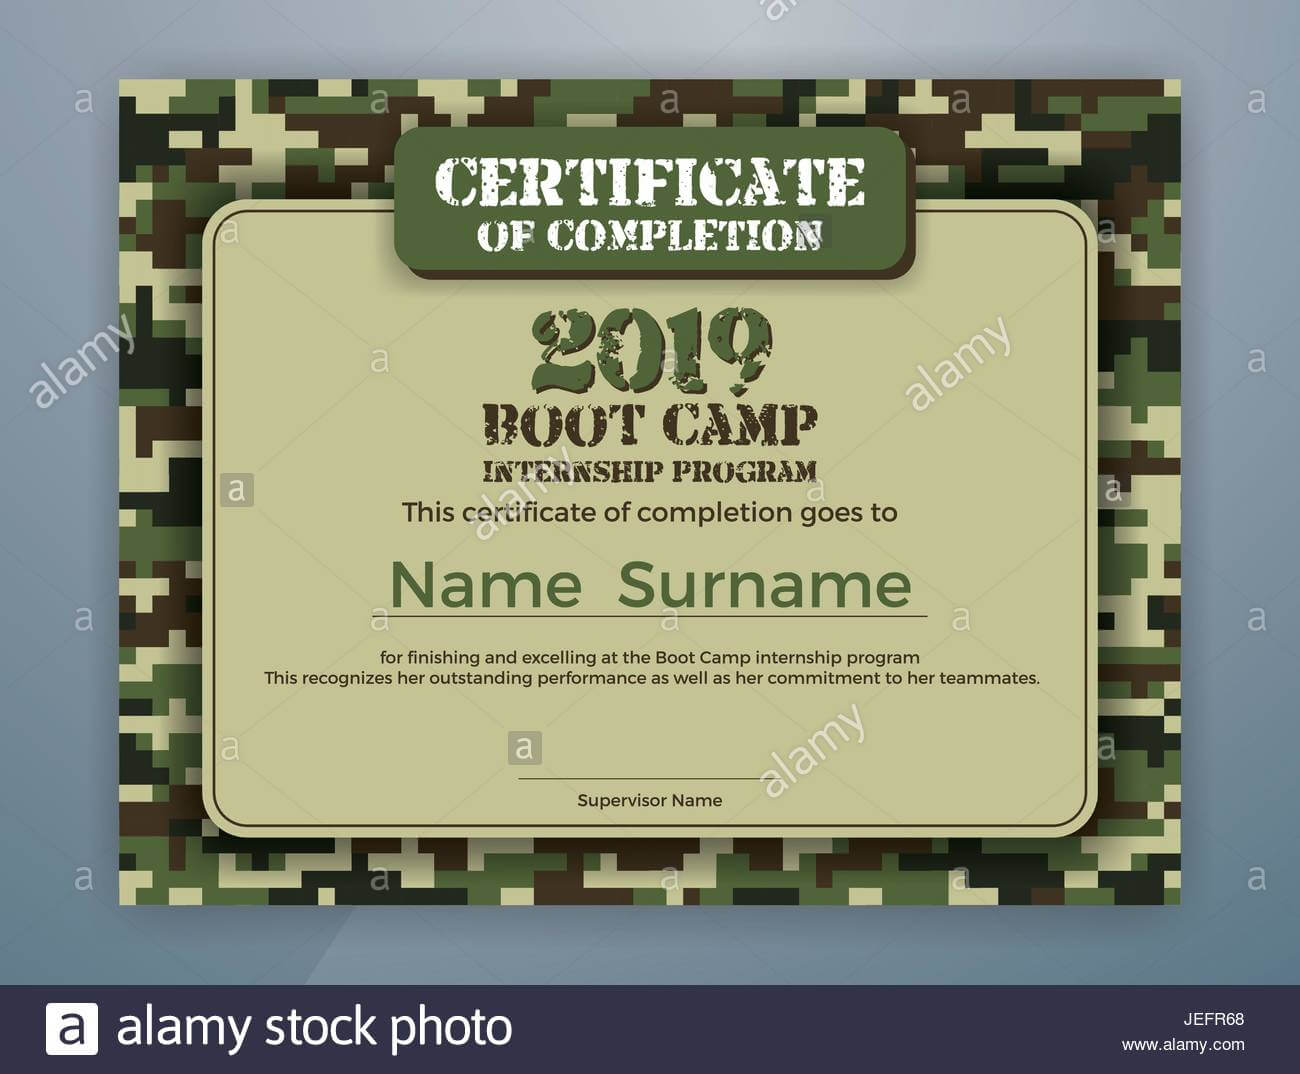 Boot Camp Internship Program Certificate Template Design With Boot Camp Certificate Template